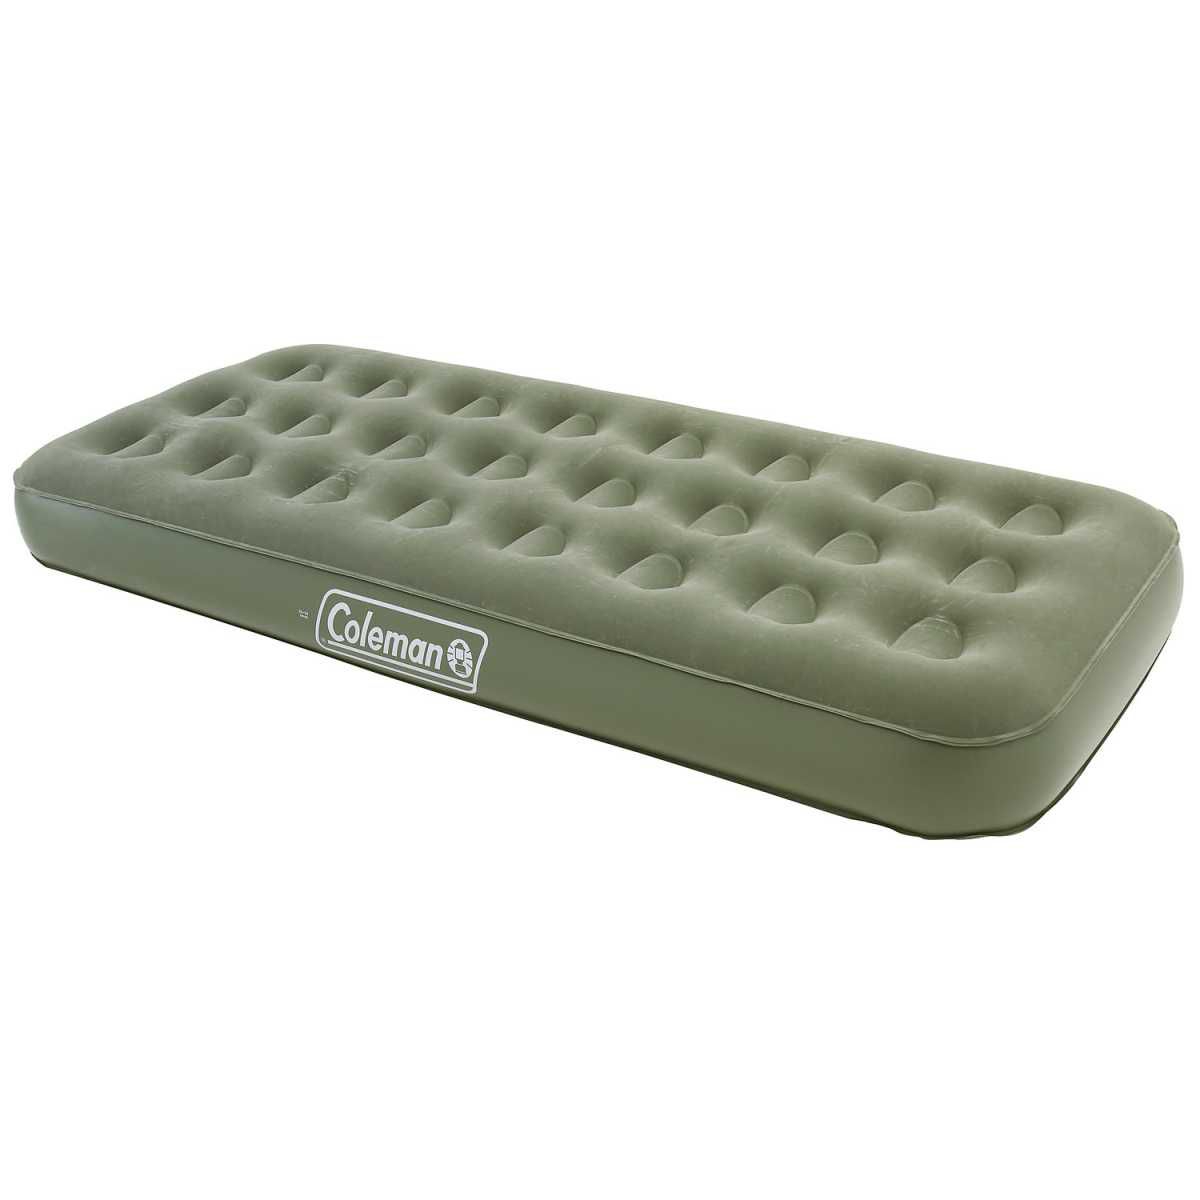 COLEMAN Luftbett Maxi Comfort Bed Single - 2000039166